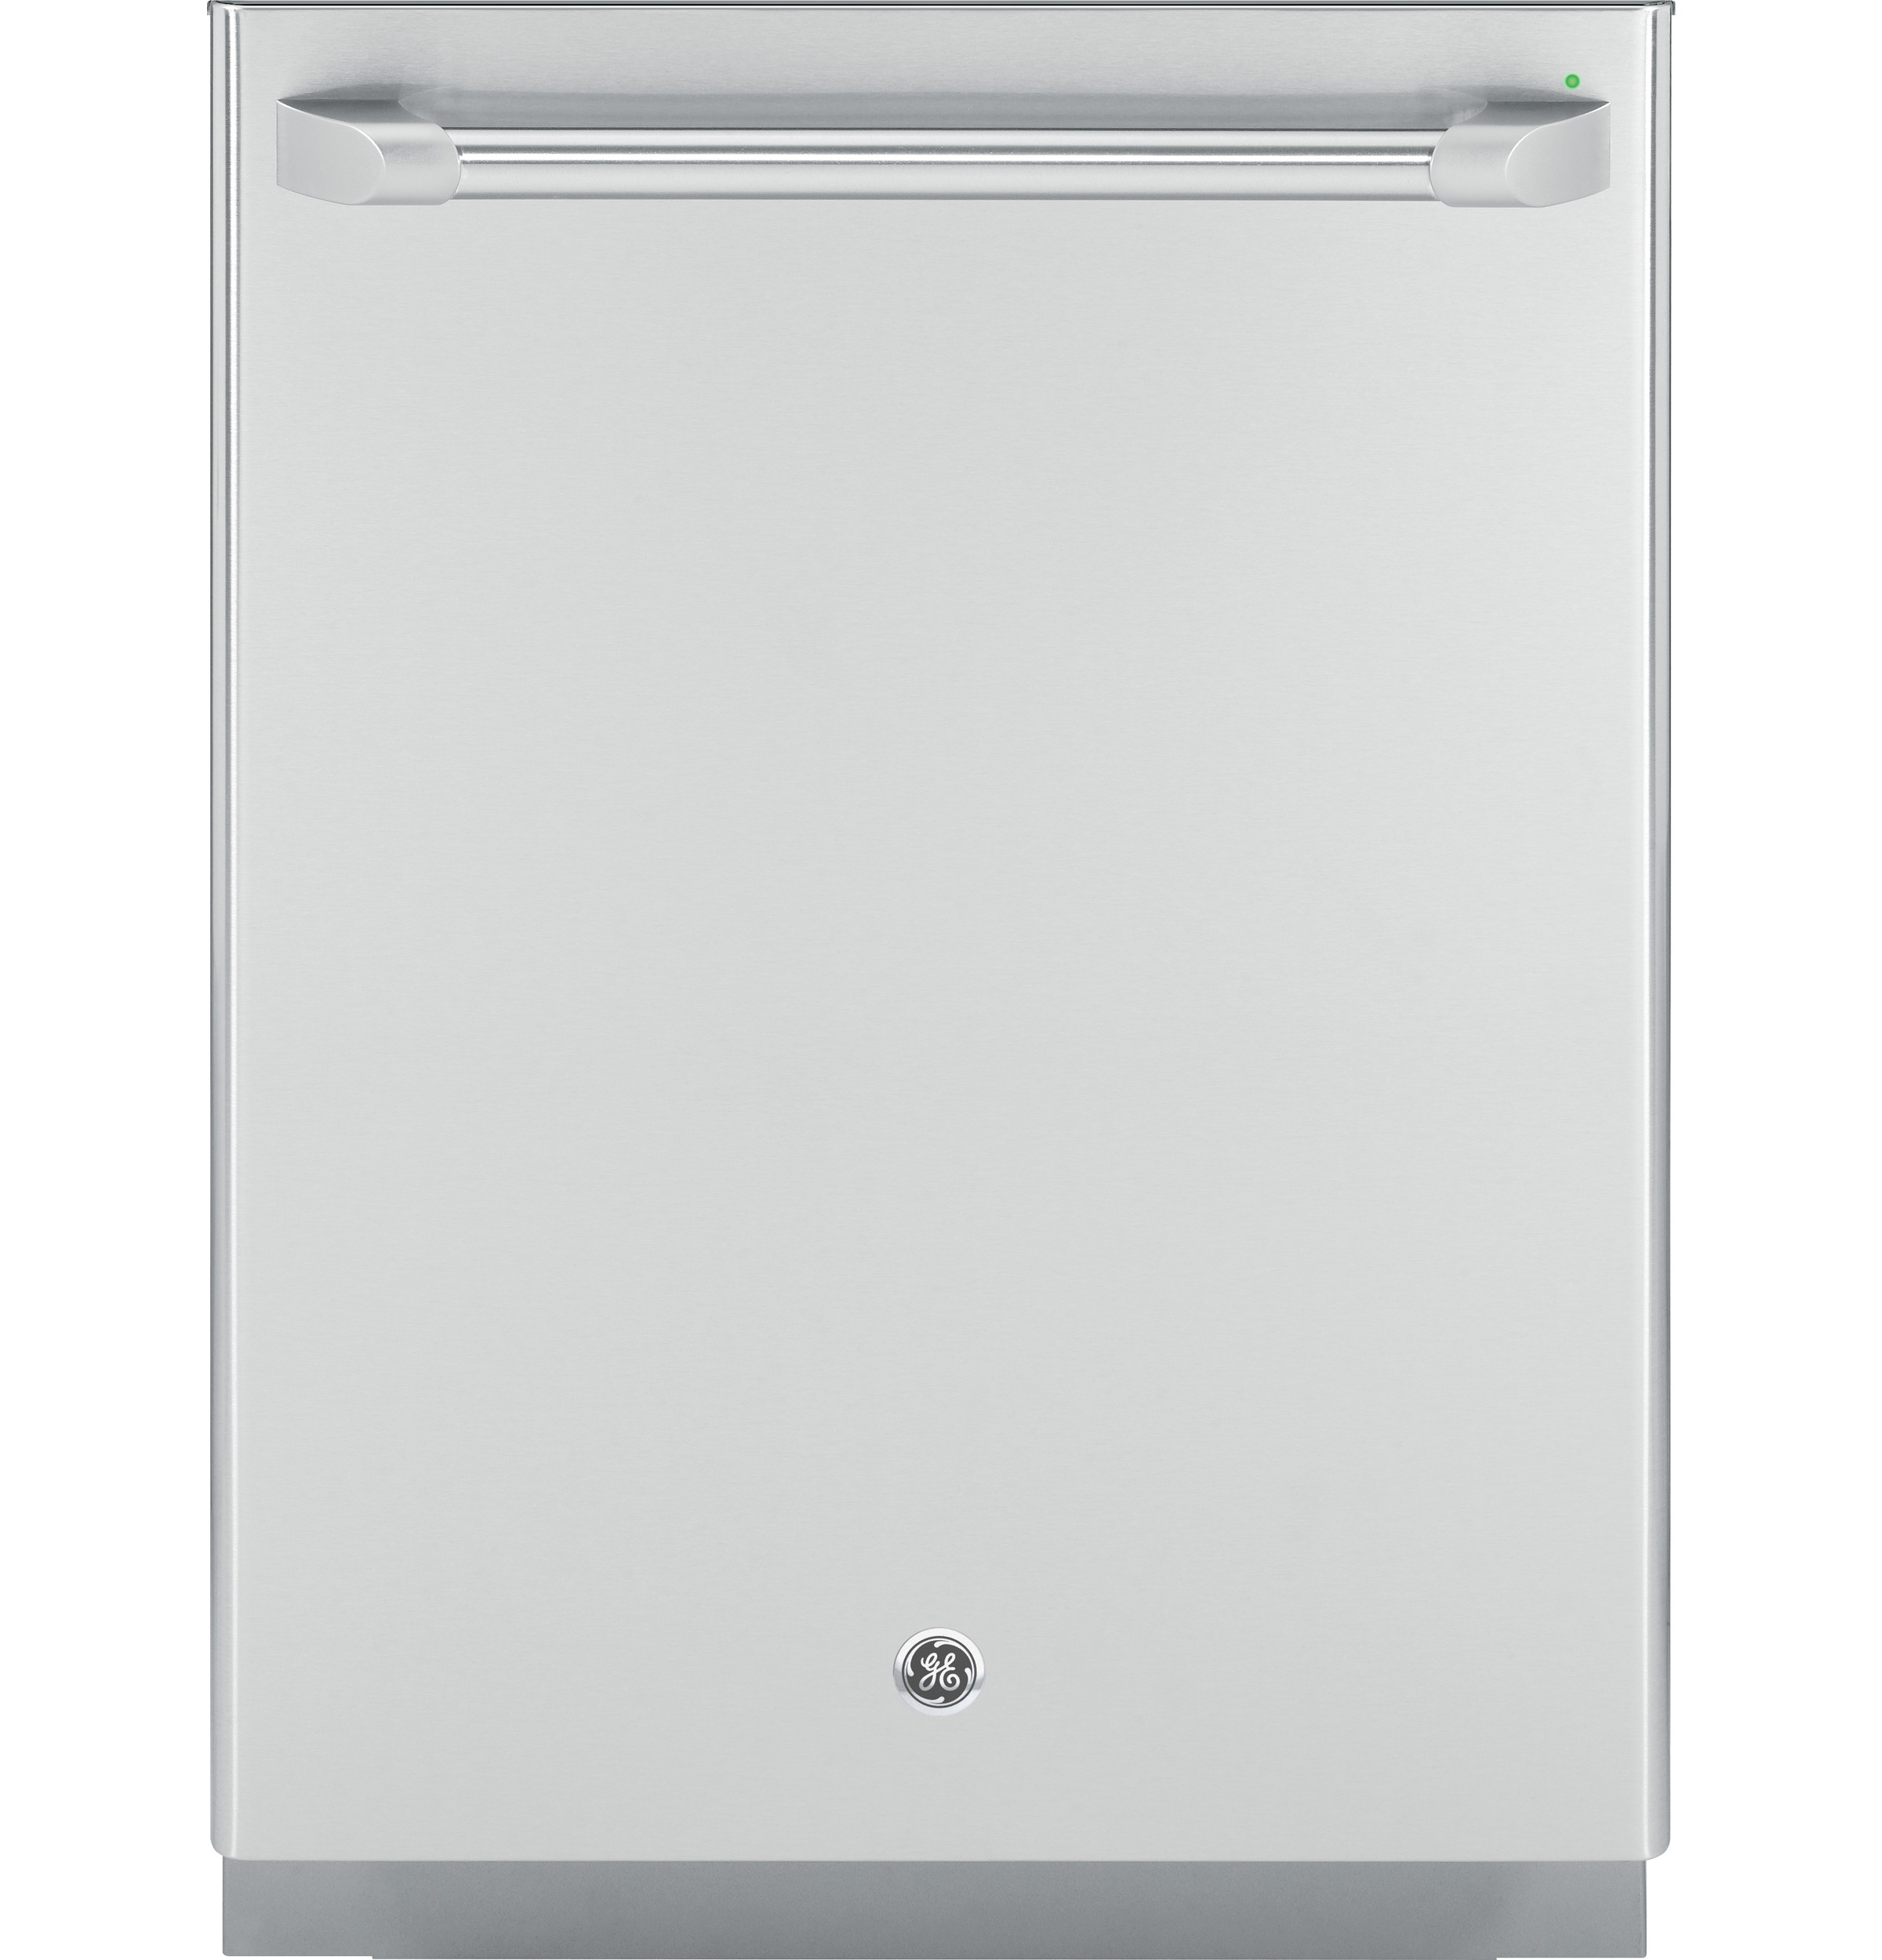 GE Café™ Series Dishwasher with SmartDispense™ Technology